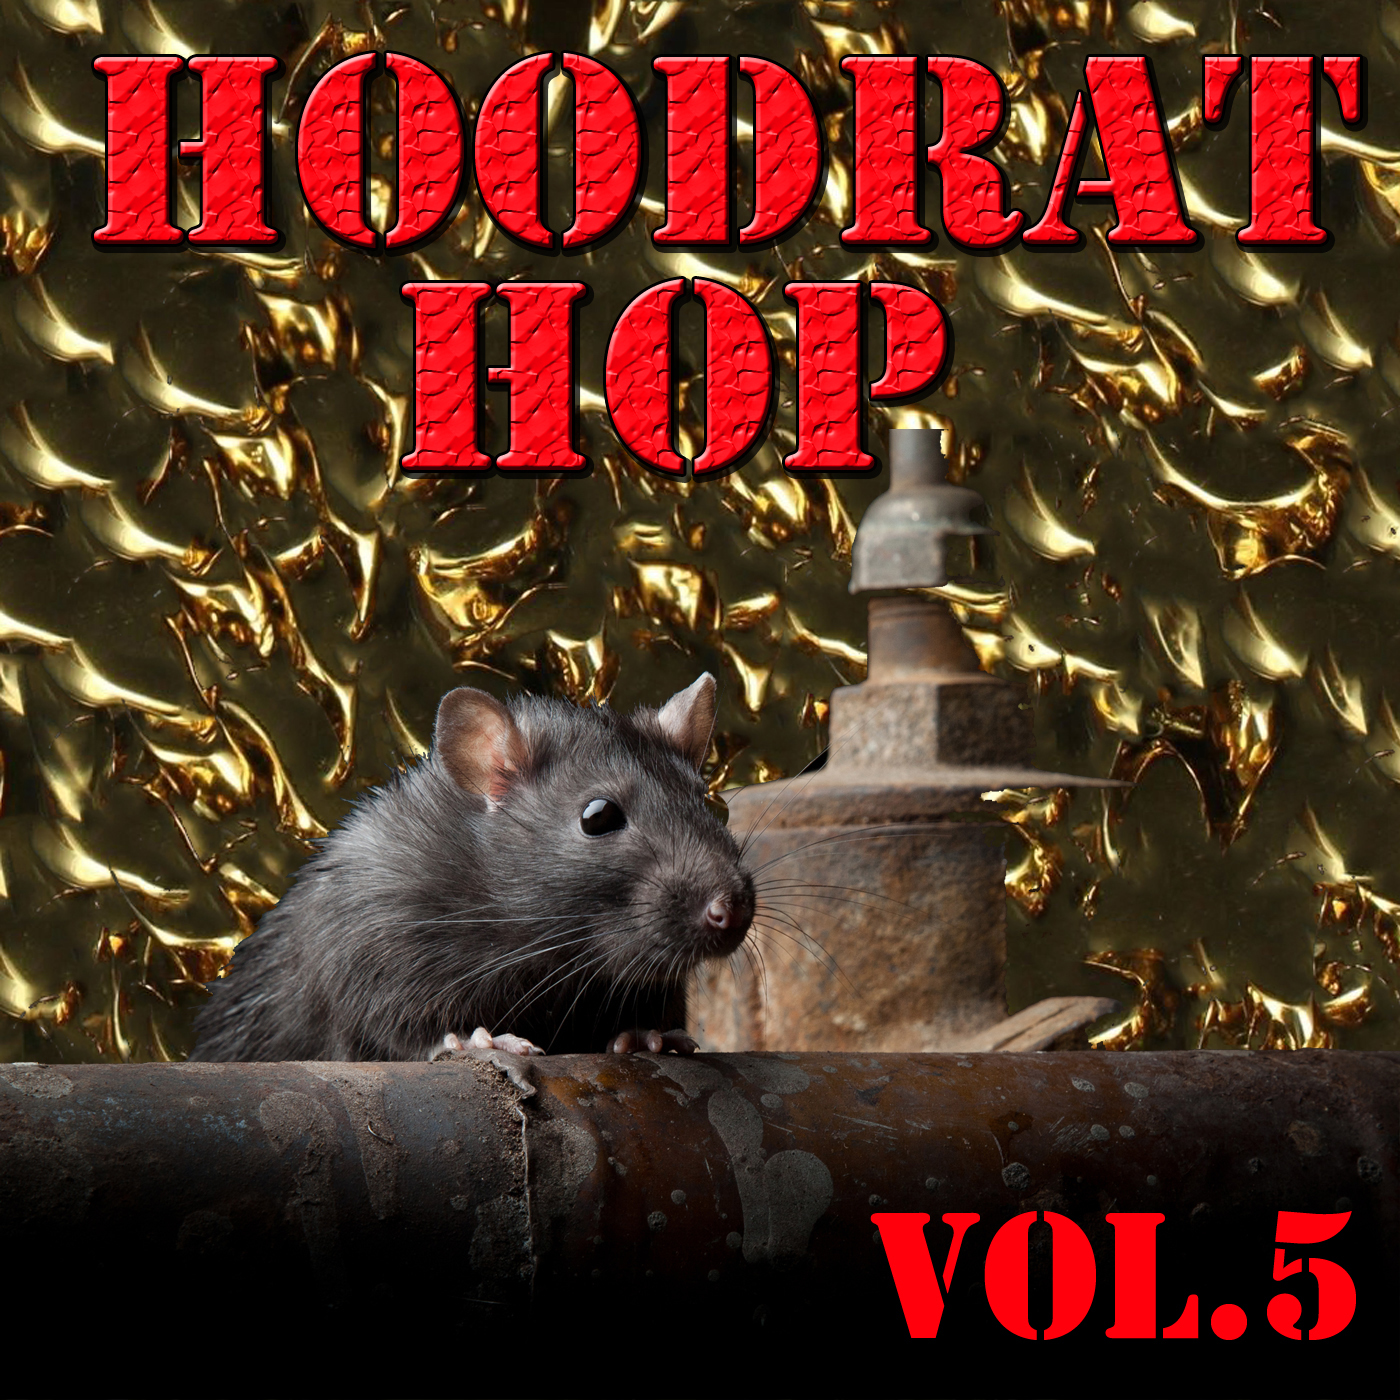 Hoodrat Hop, Vol.5